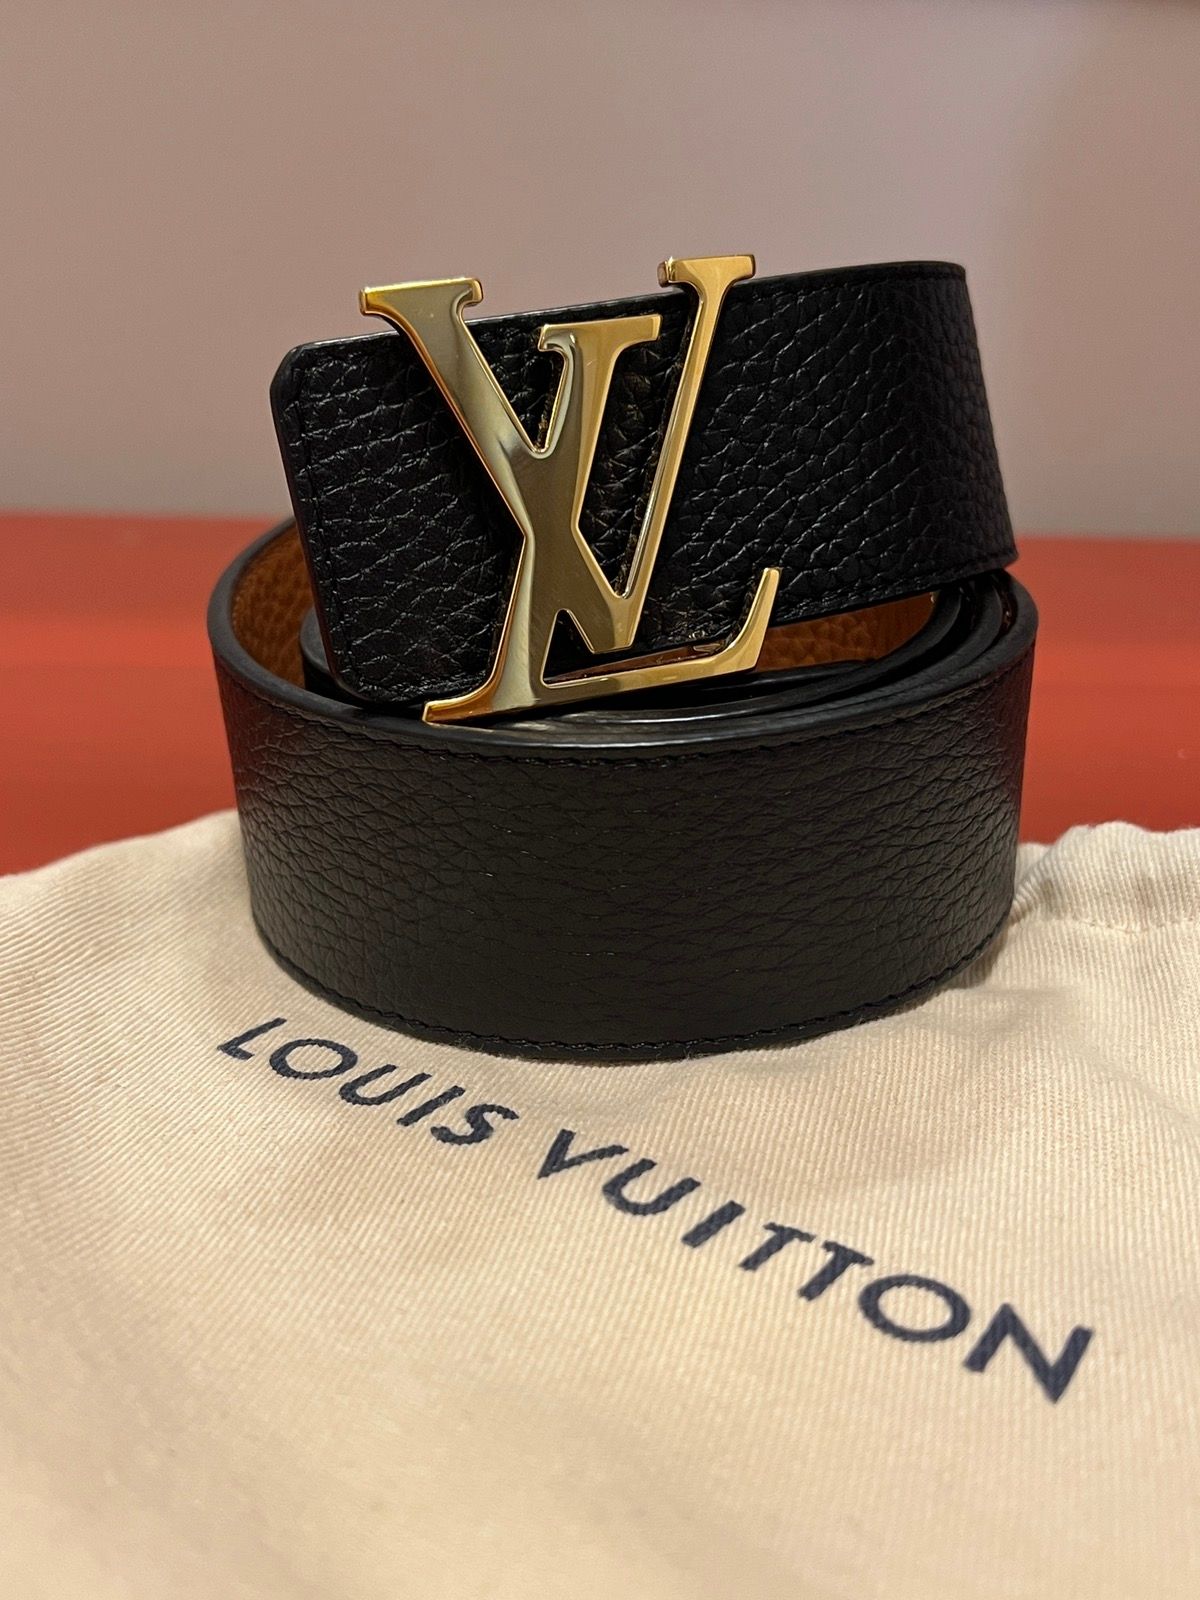 Louis Vuitton Louis Vuitton Reversible Gold Initials Belt (Black/Brown)